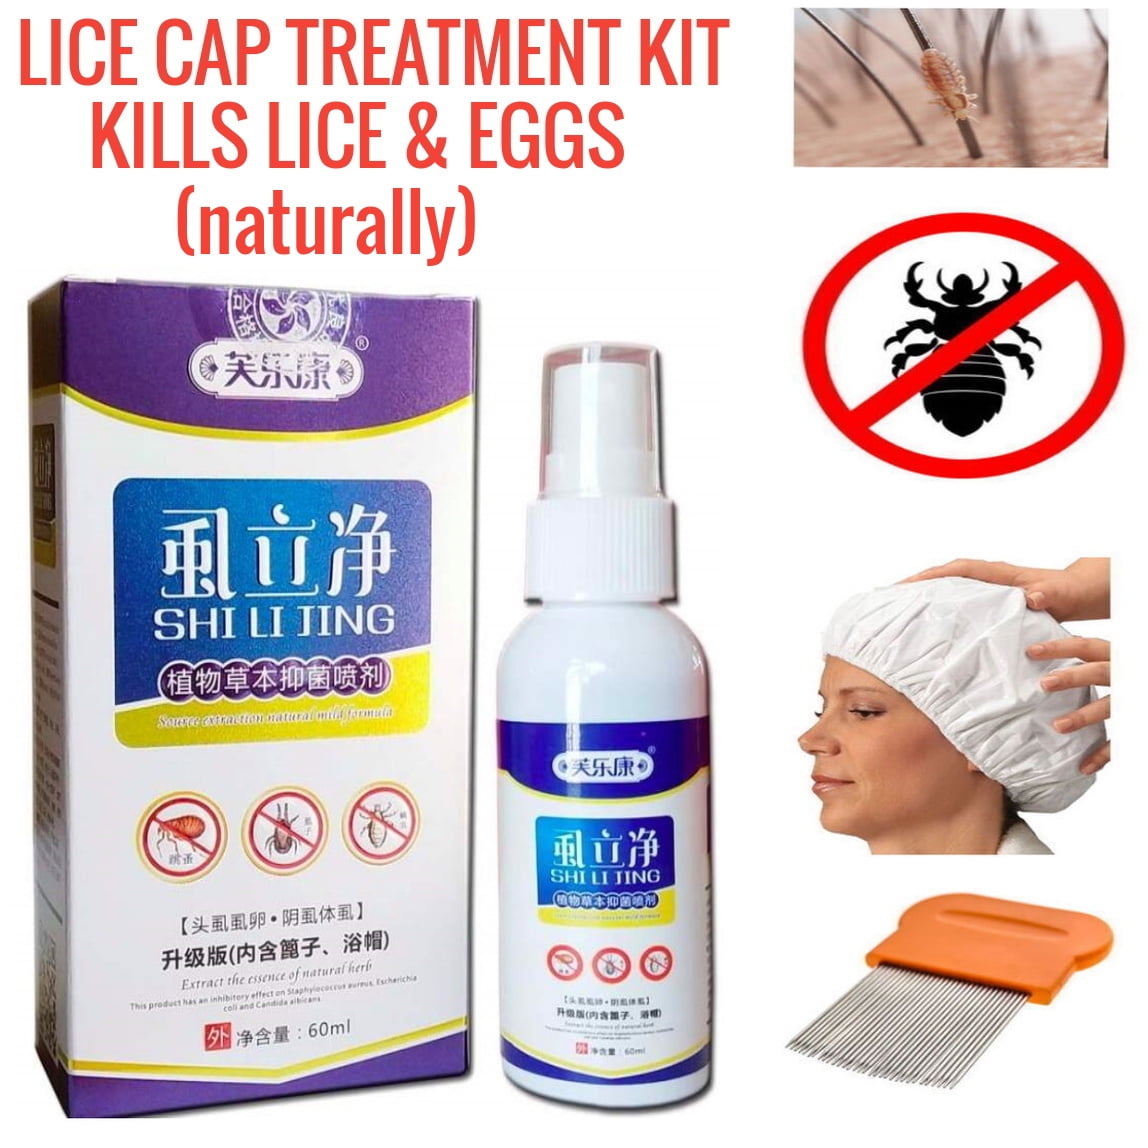 Crab lice treatment